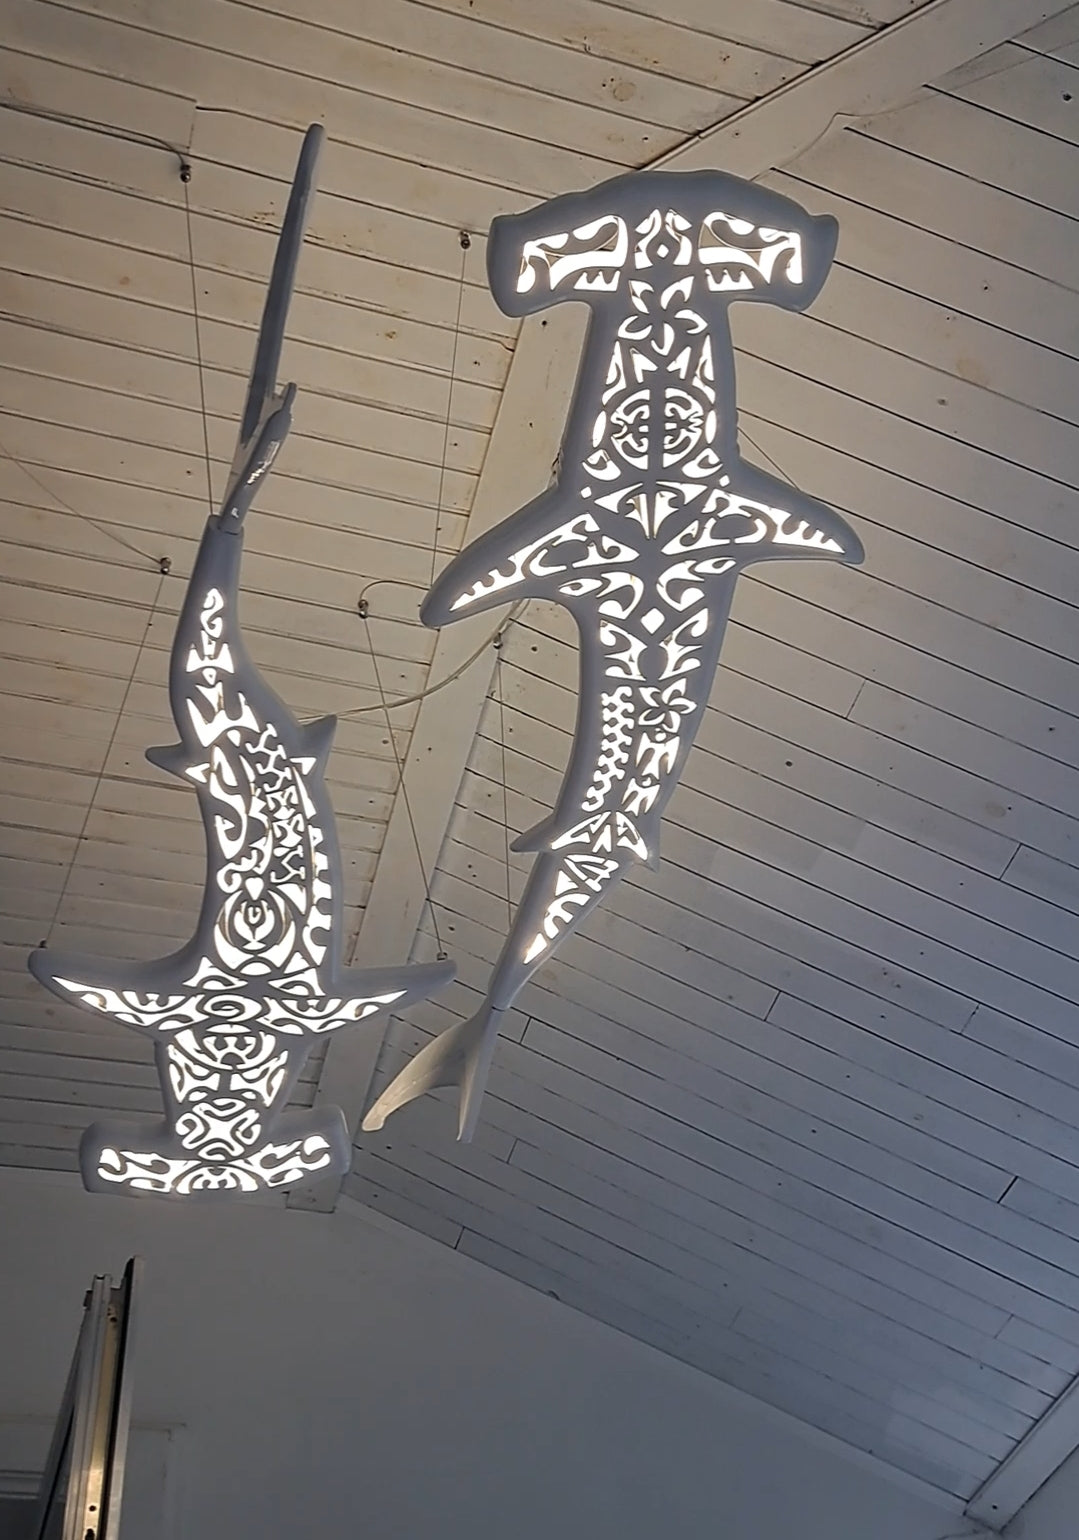 82 inches Handmade ceiling chandelier with 2 hammerhead sharks: LED wall light for beach coastal or nautical Maori surfing style room decor